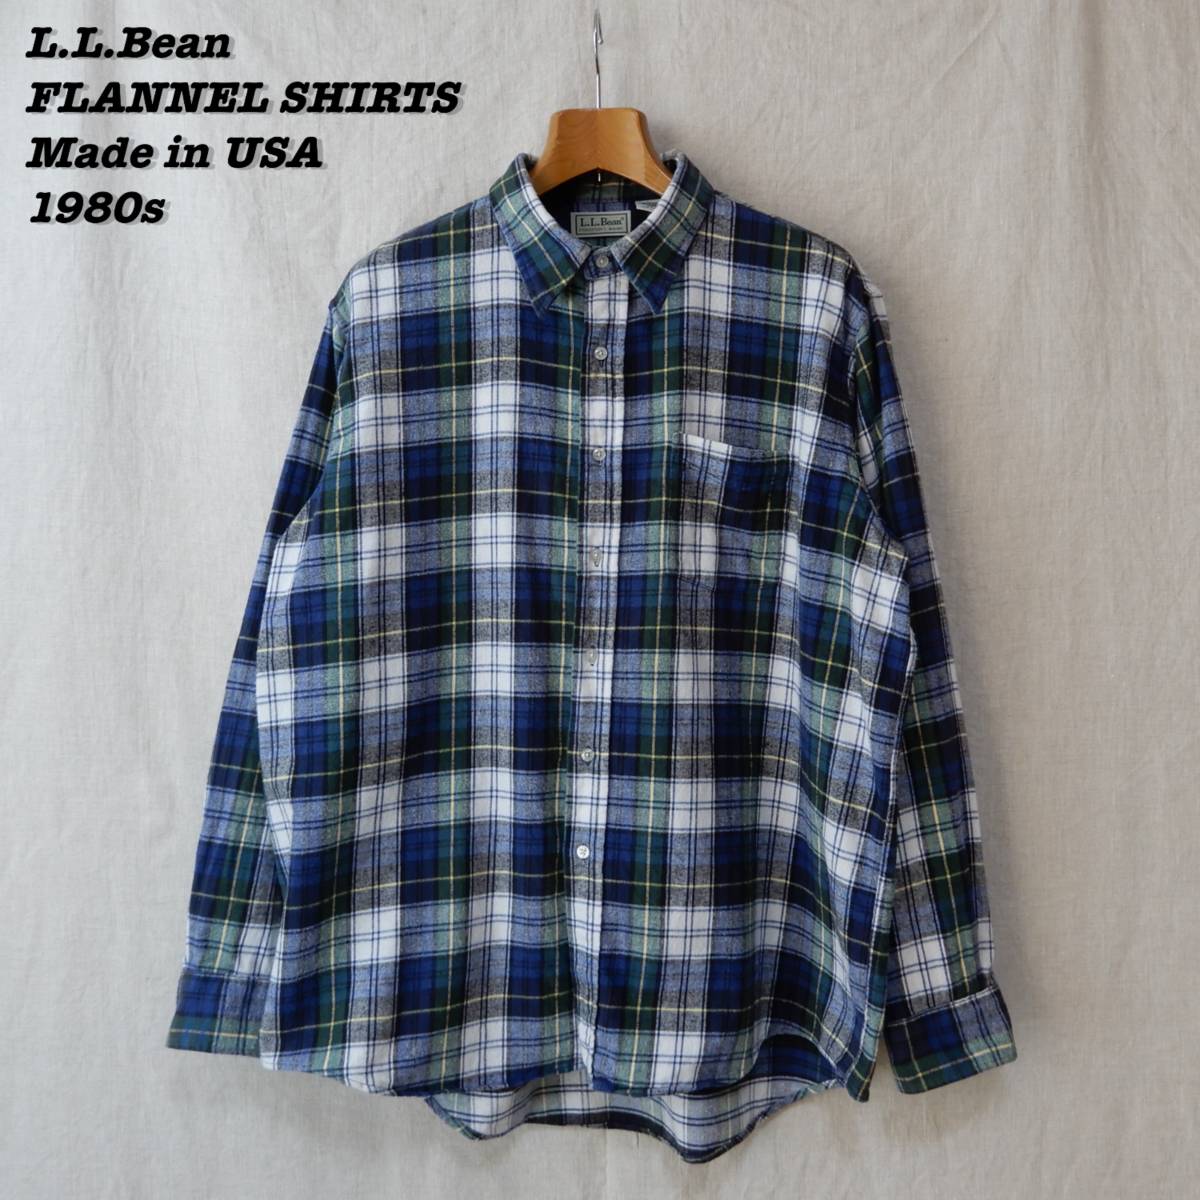 L.L.Bean FLANNEL SHIRTS 1980s X-LARGE SHIRT23007 エルエルビーン フランネルシャツ ネルシャツ 1980年代 アメリカ製